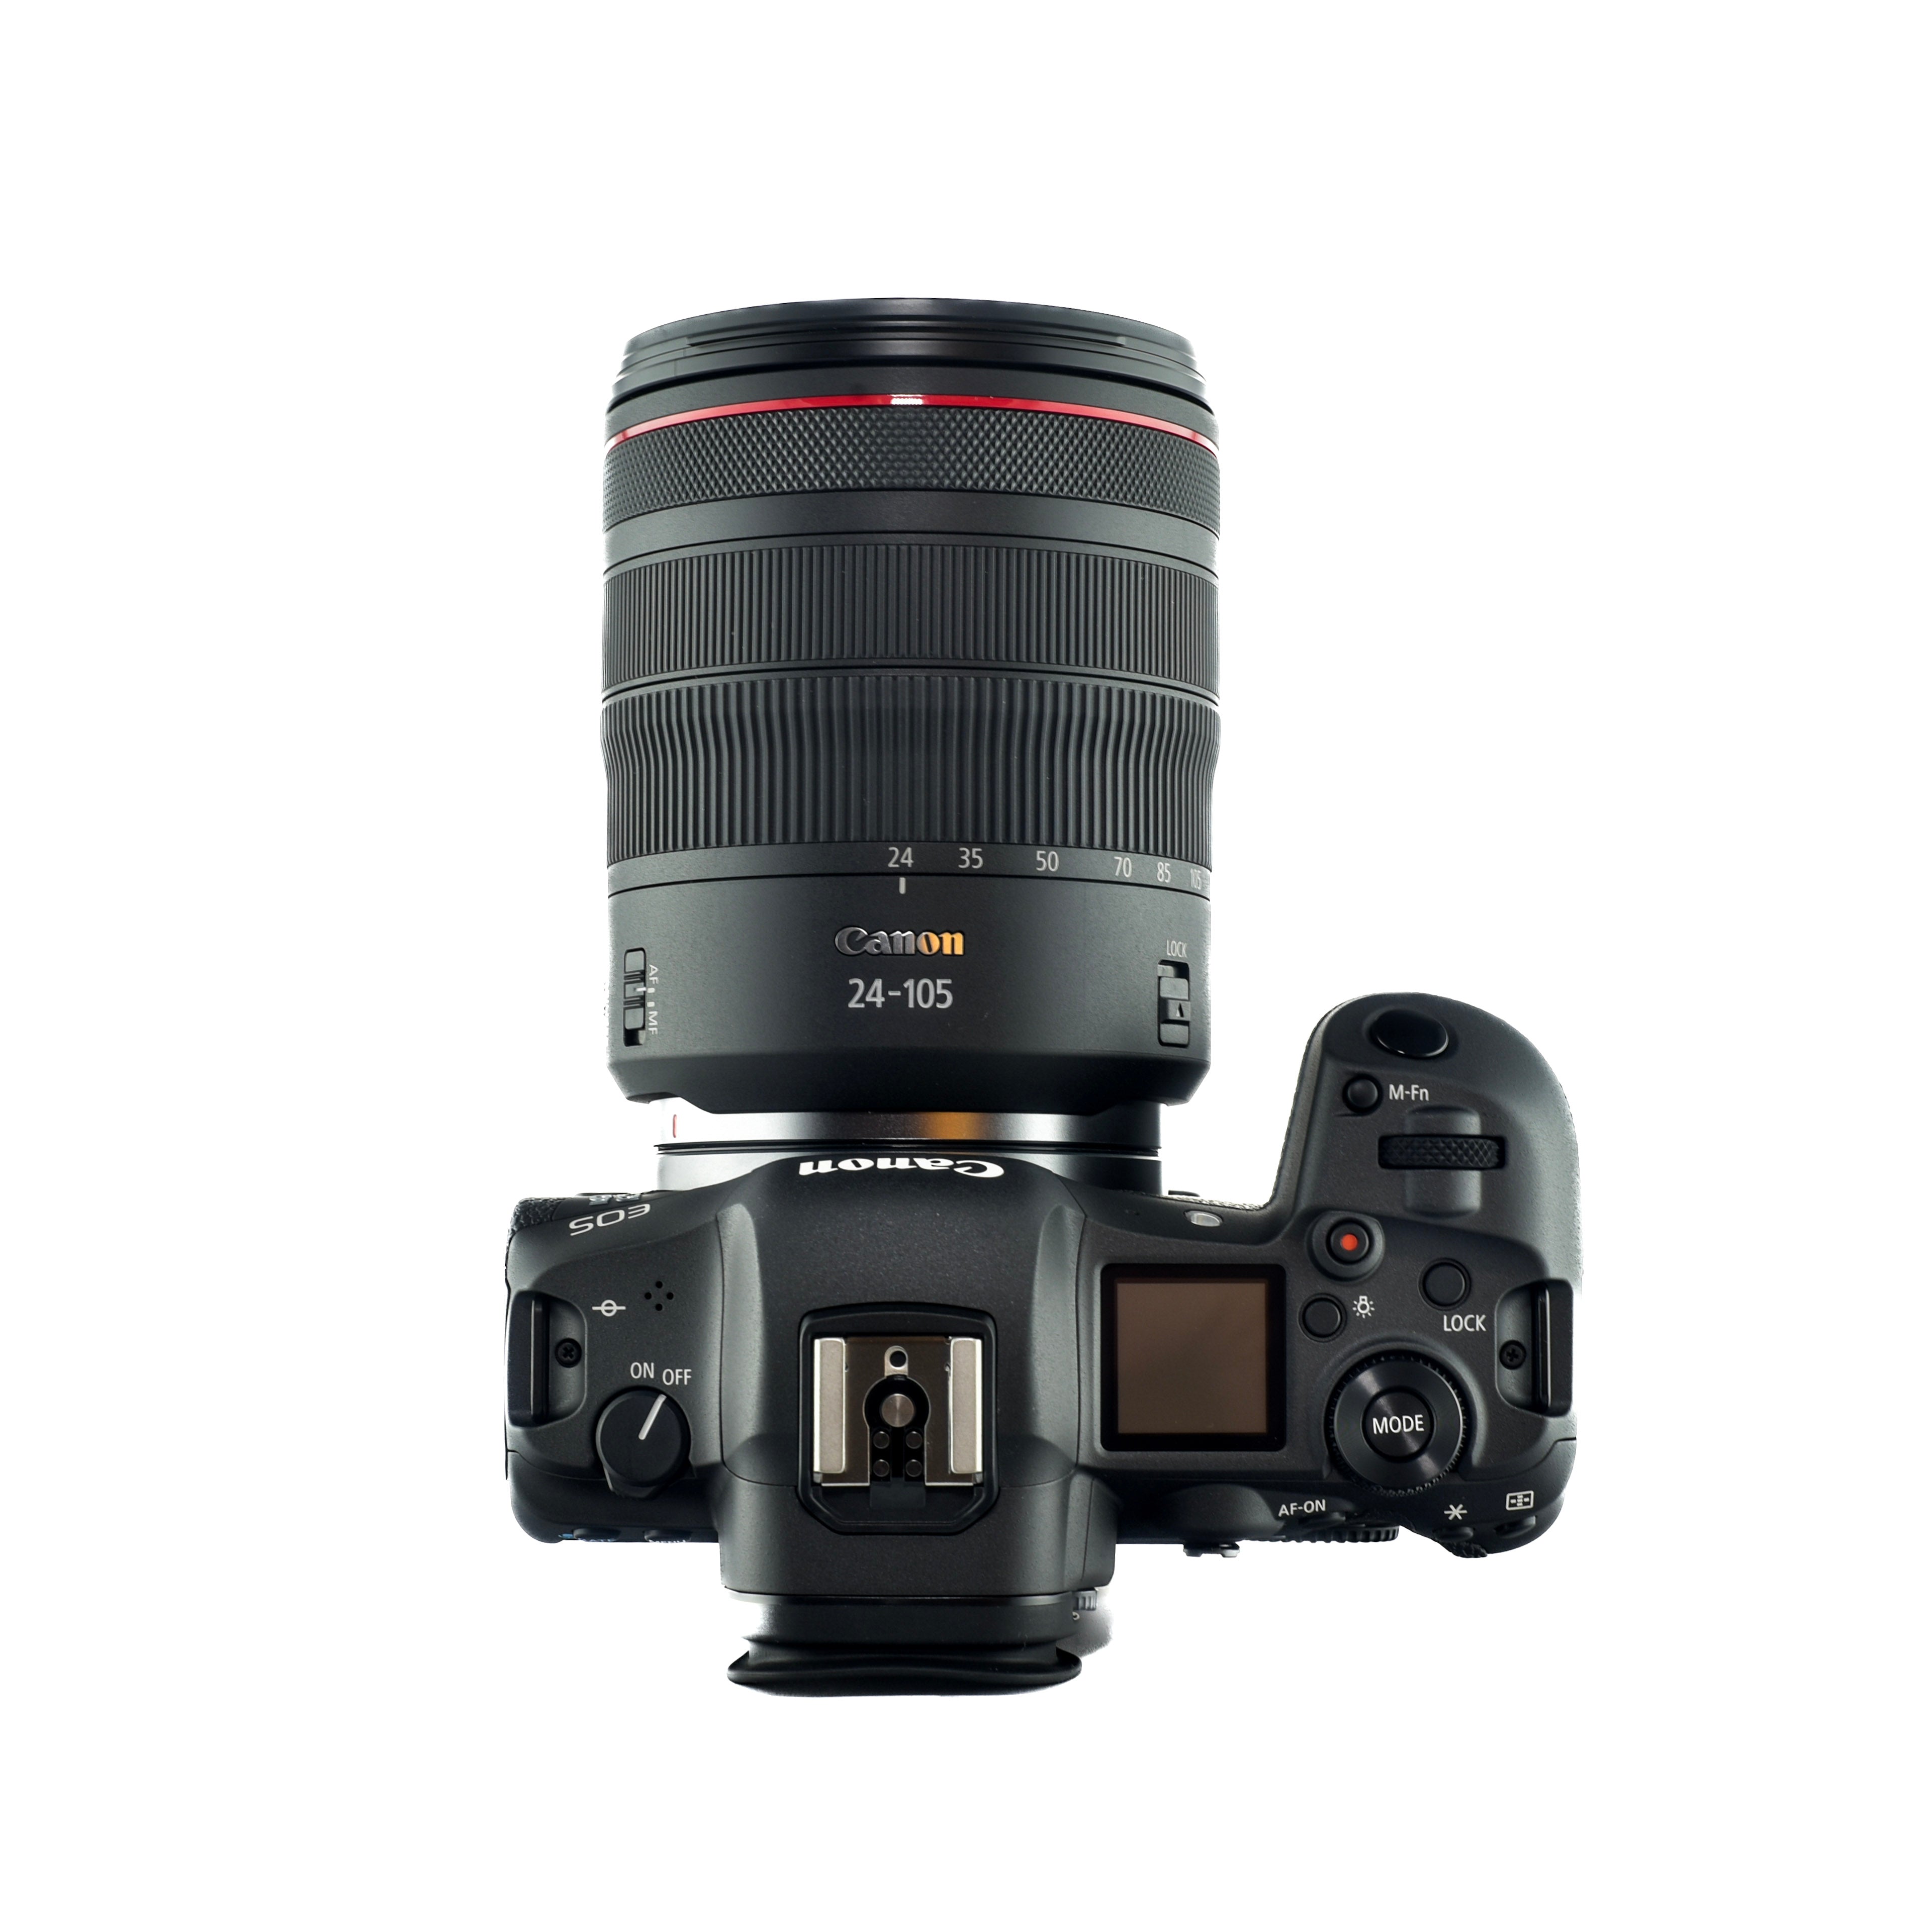 Canon Eos R5 Mirrorless Dslr Camera & 24-105mm f4 L IS USM lens